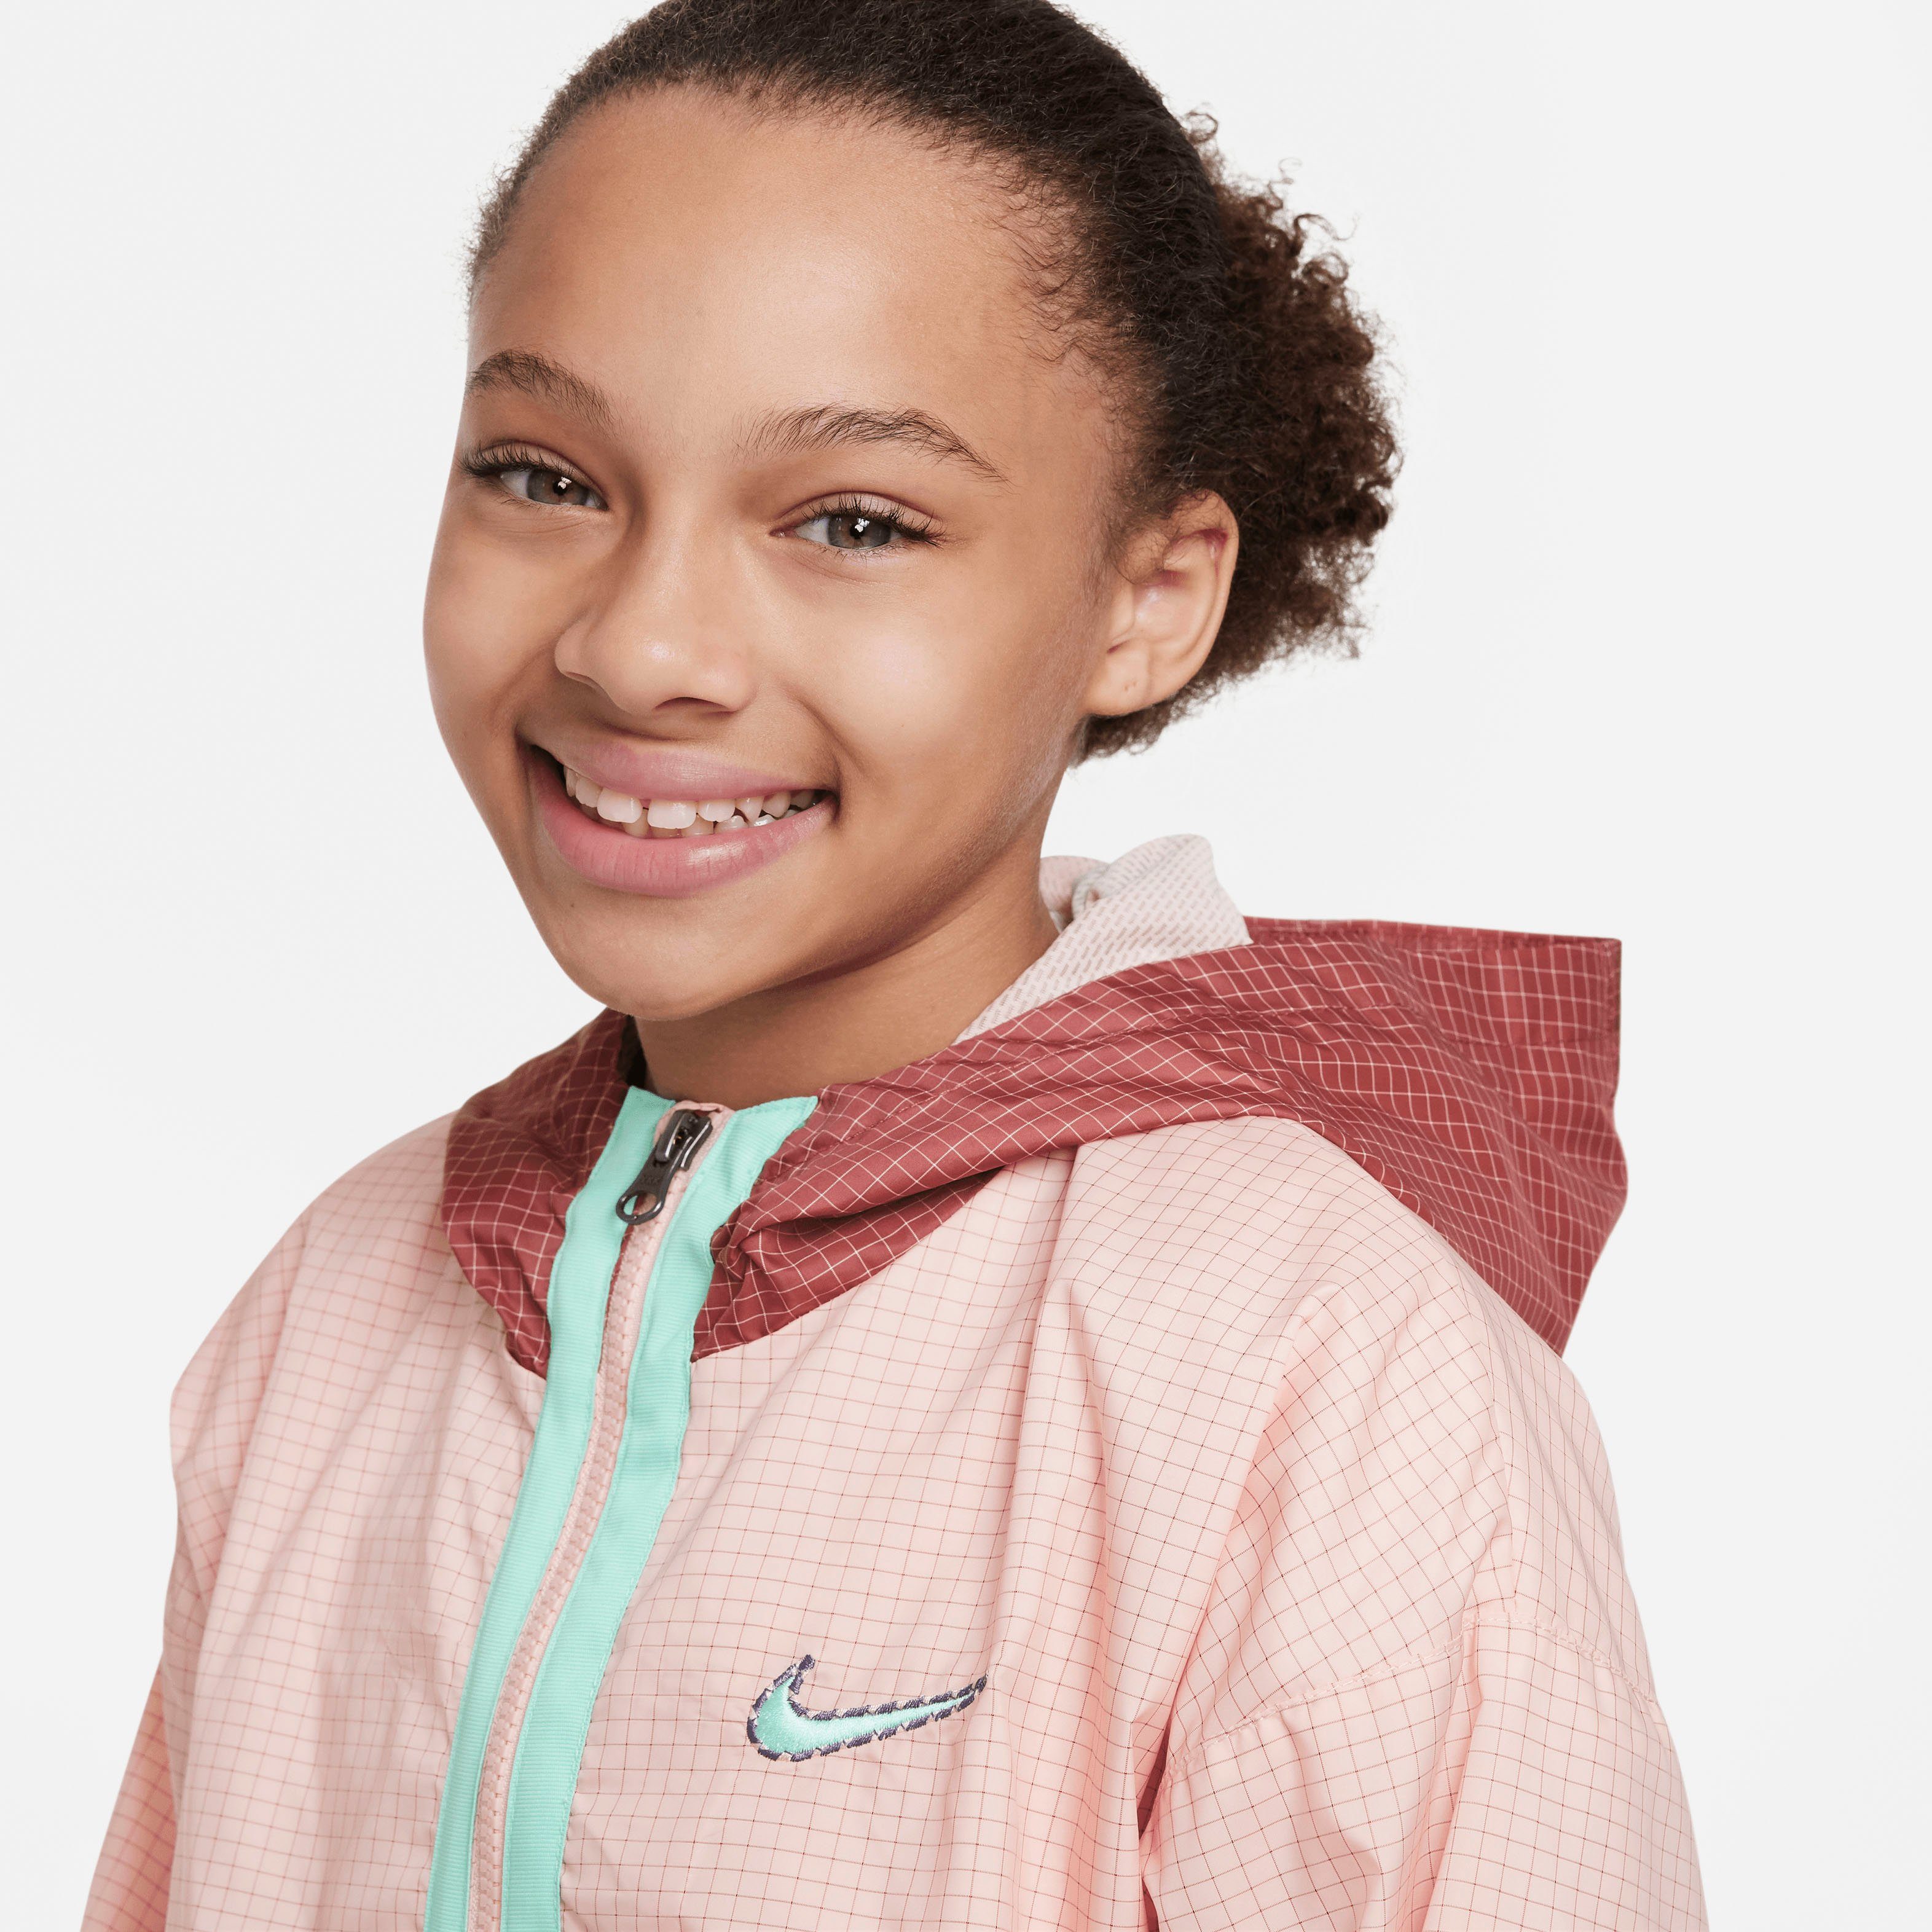 Nike ARCTIC Kids' Outdoorjacke Big ORANGE/CANYON RUST Sportswear Jacket ODP Woven